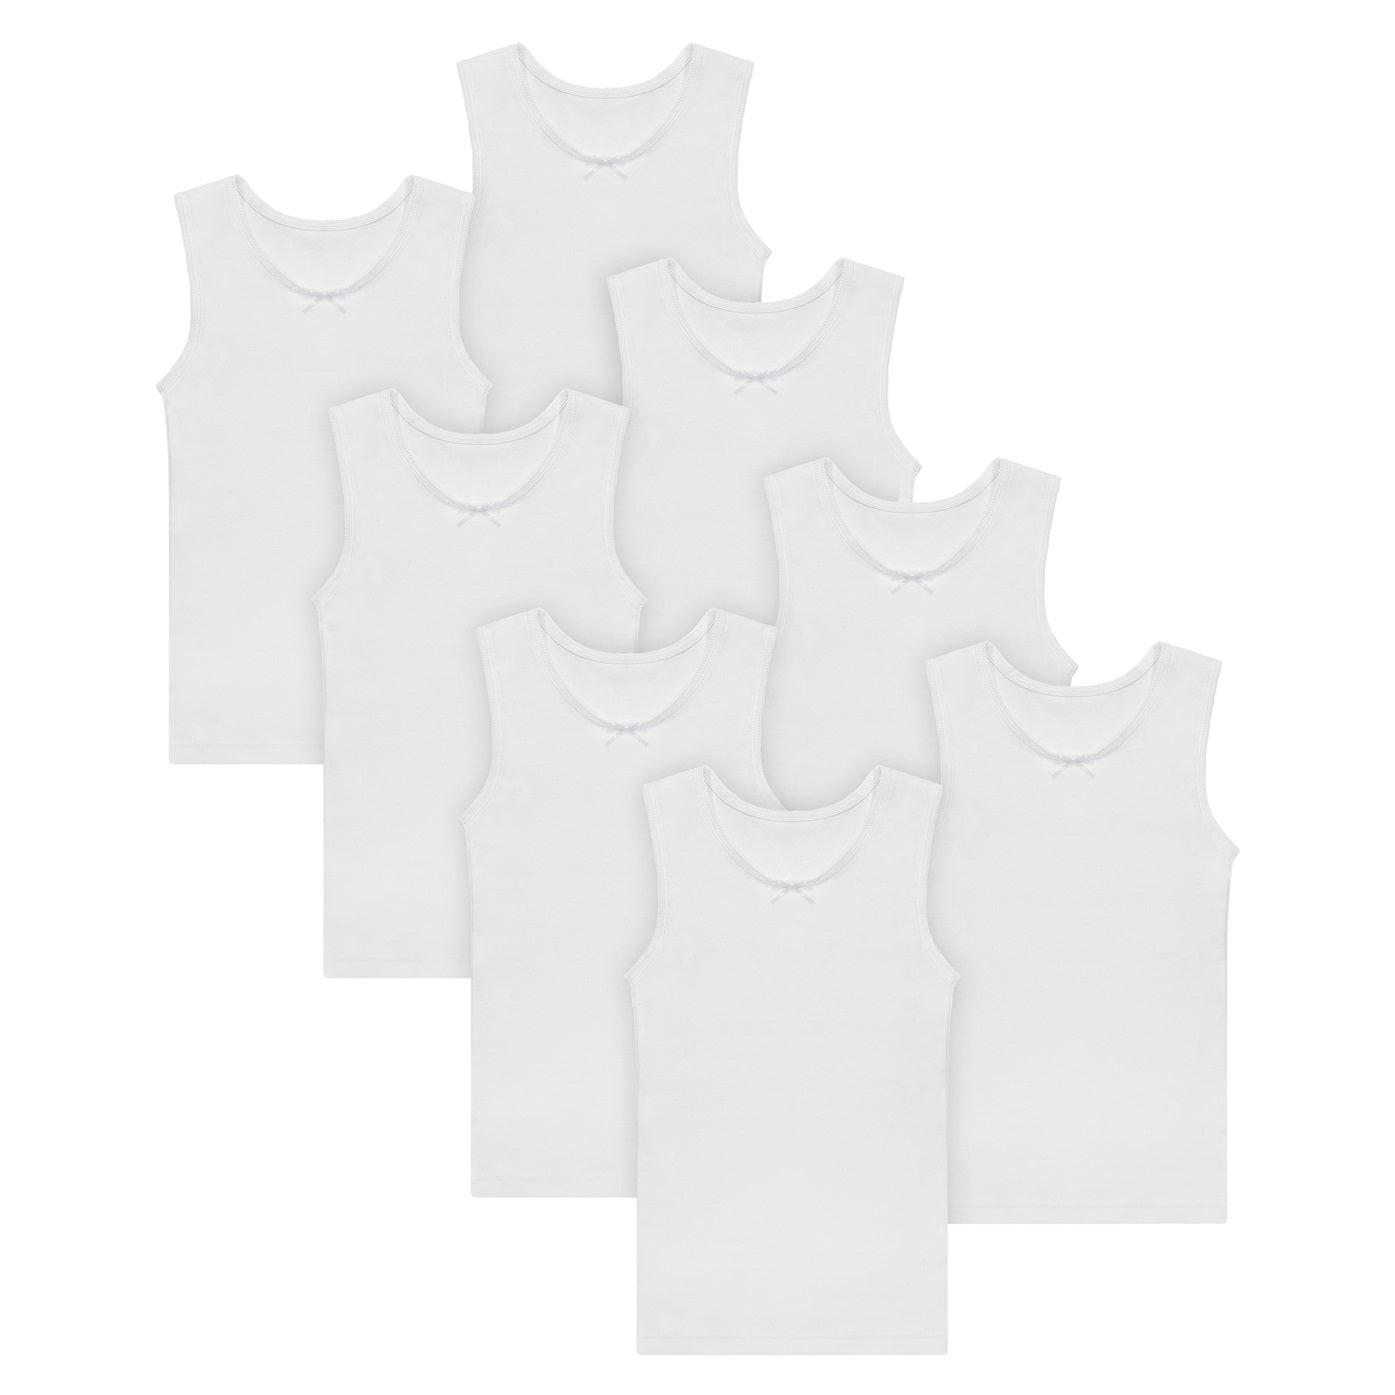 Buyless Fashion Big Girls Tagless Cami Scoop Neck Undershirts White Cotton Tank With Trim (8 Pack)